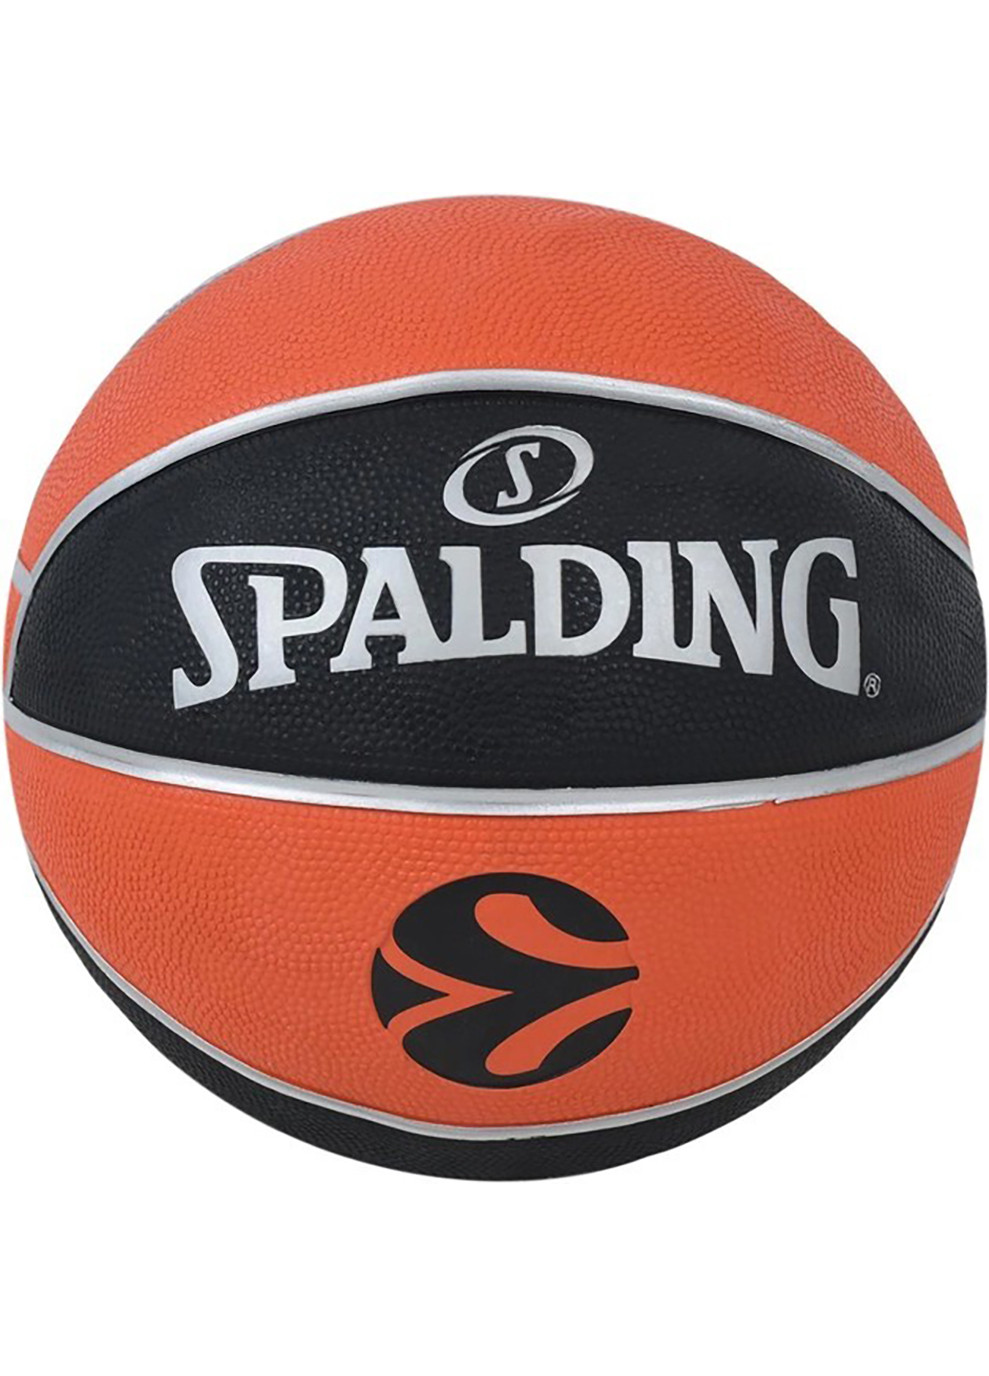 Баскетбольный Мяч Euroleague TF-150 оранжевый Уни Spalding (260646659)